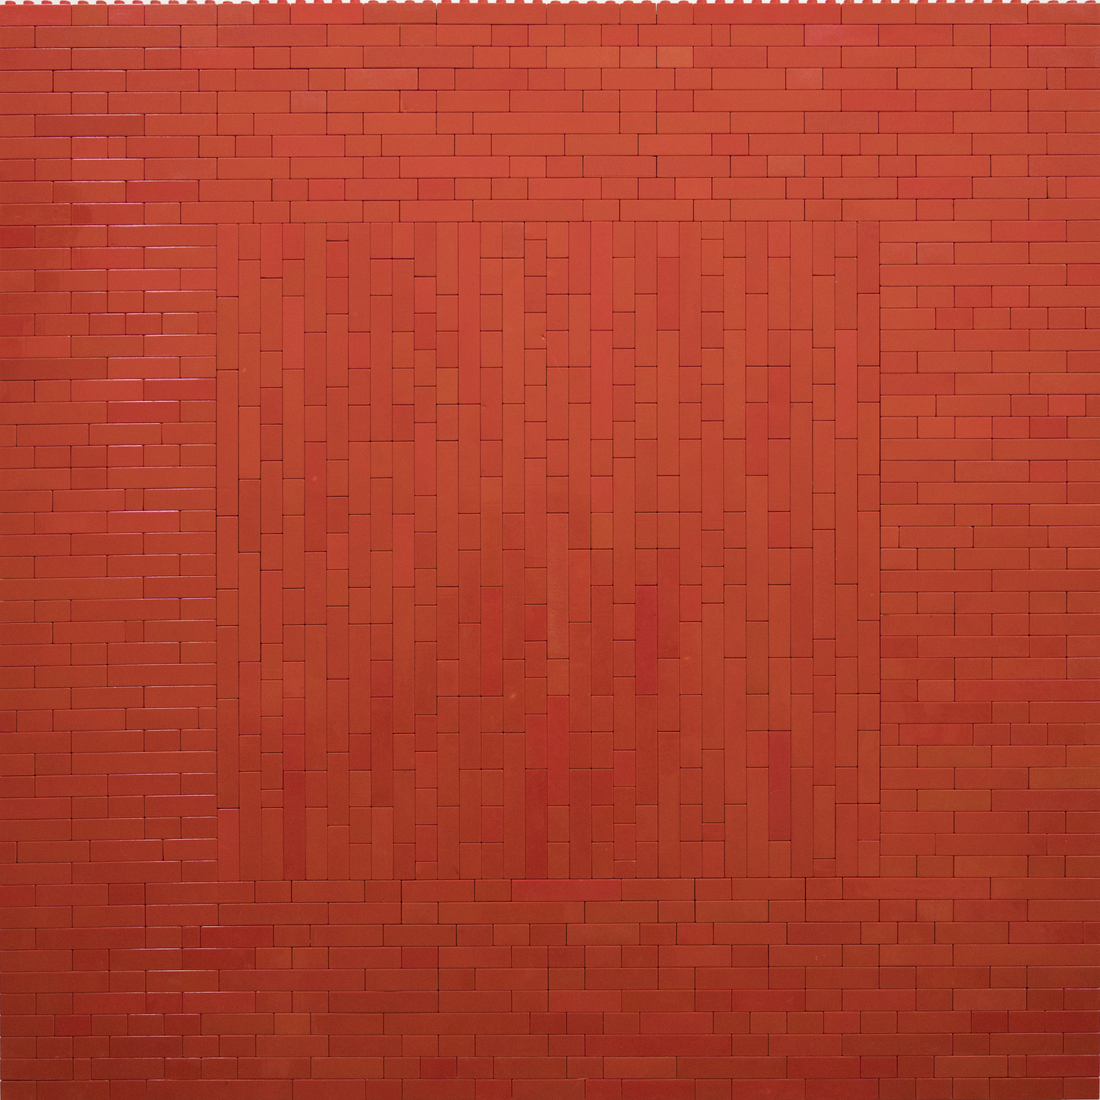 Rode duplo lego vierkant